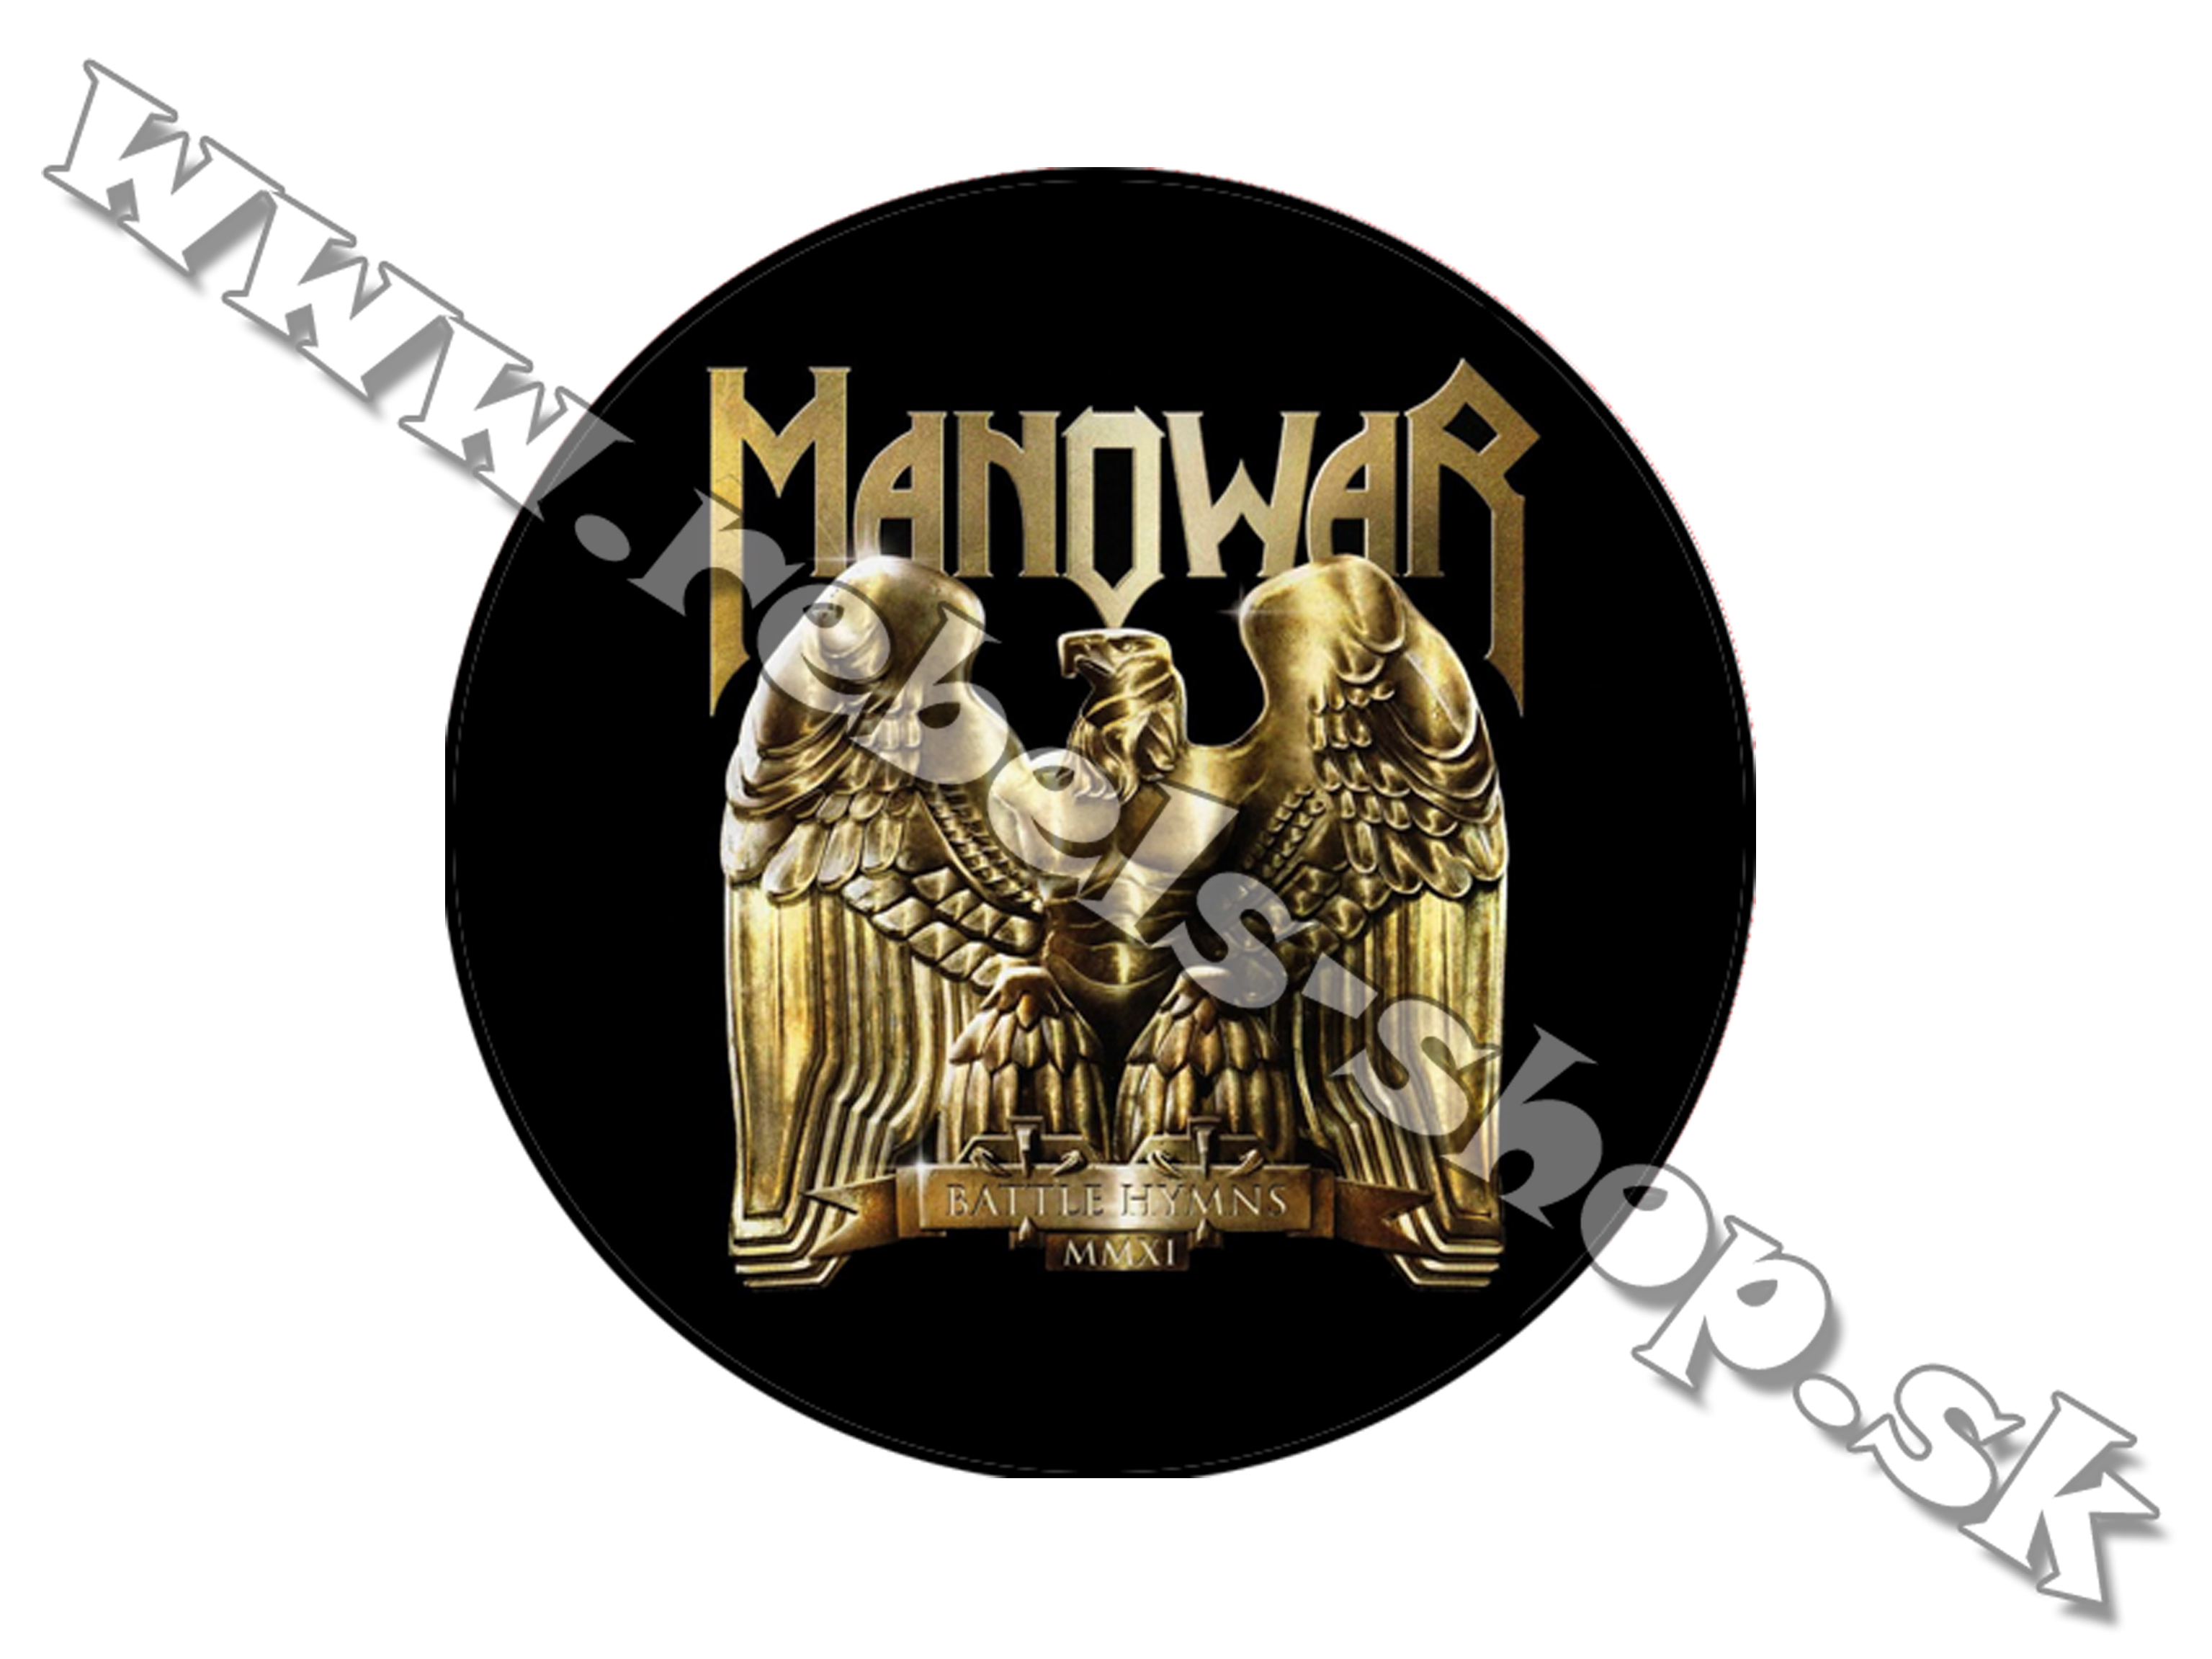 Odznak "Manowar"